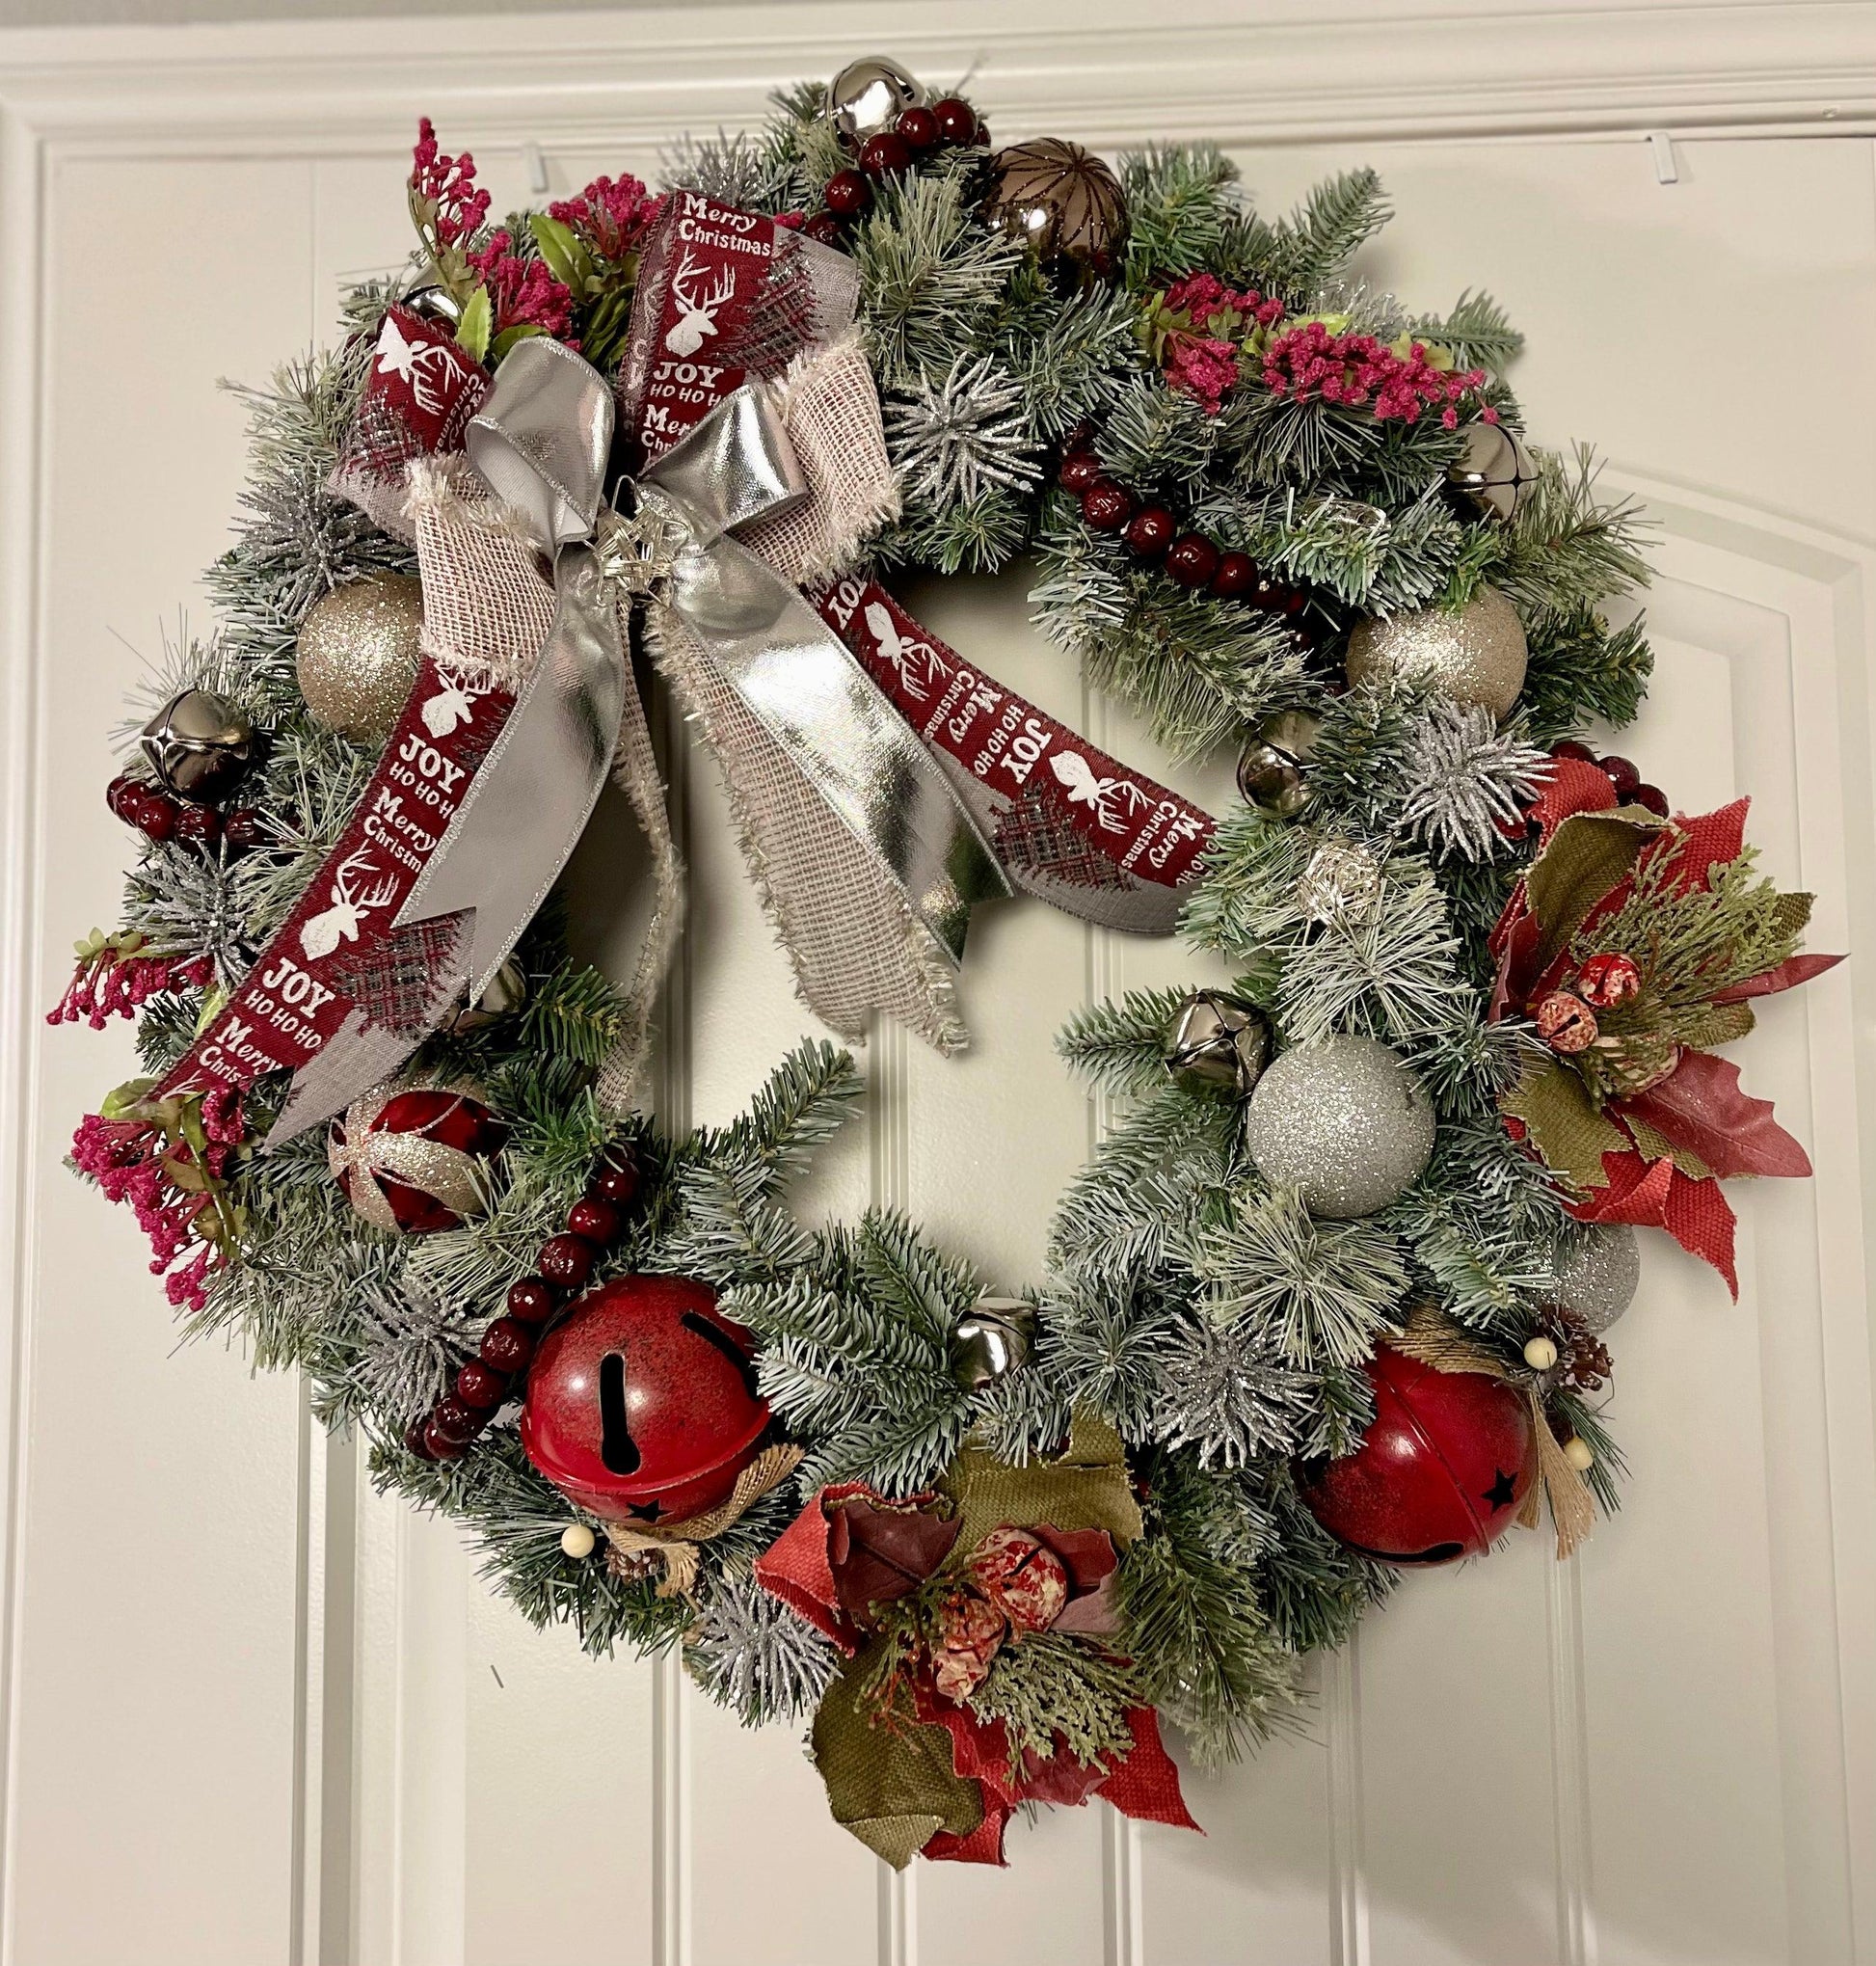 Custom Christmas wreath - Heart Land Designs